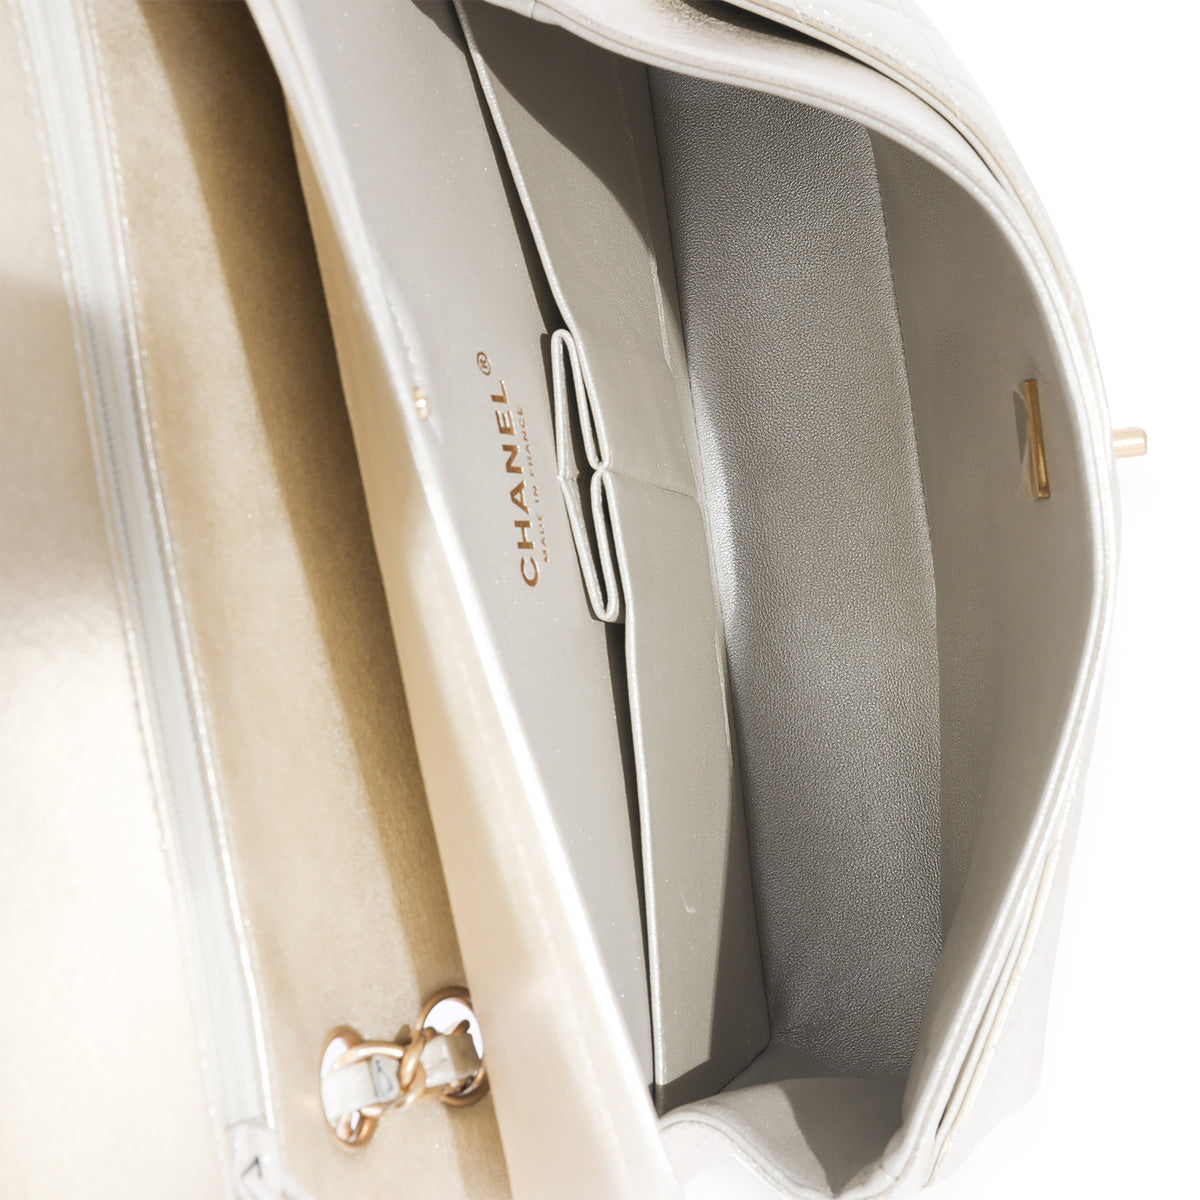 Chanel 22P Gold Lambskin Medium Classic Flap Bag